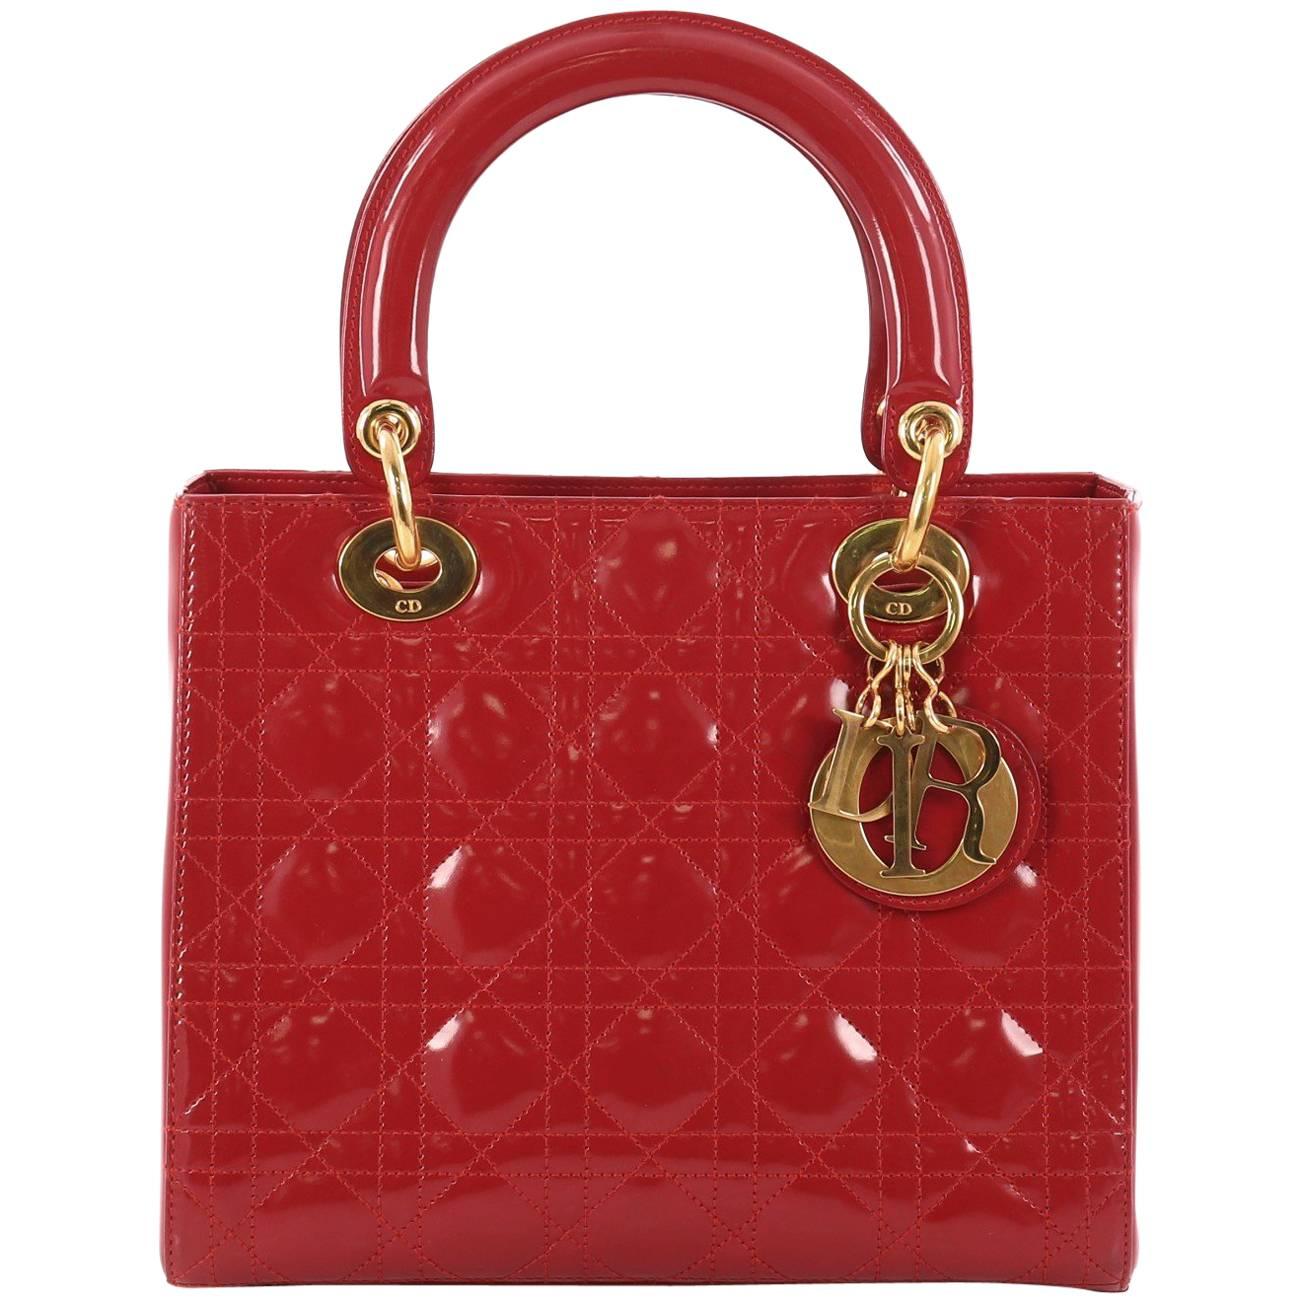 Christian Dior Lady Dior Handbag Cannage Quilt Patent Medium